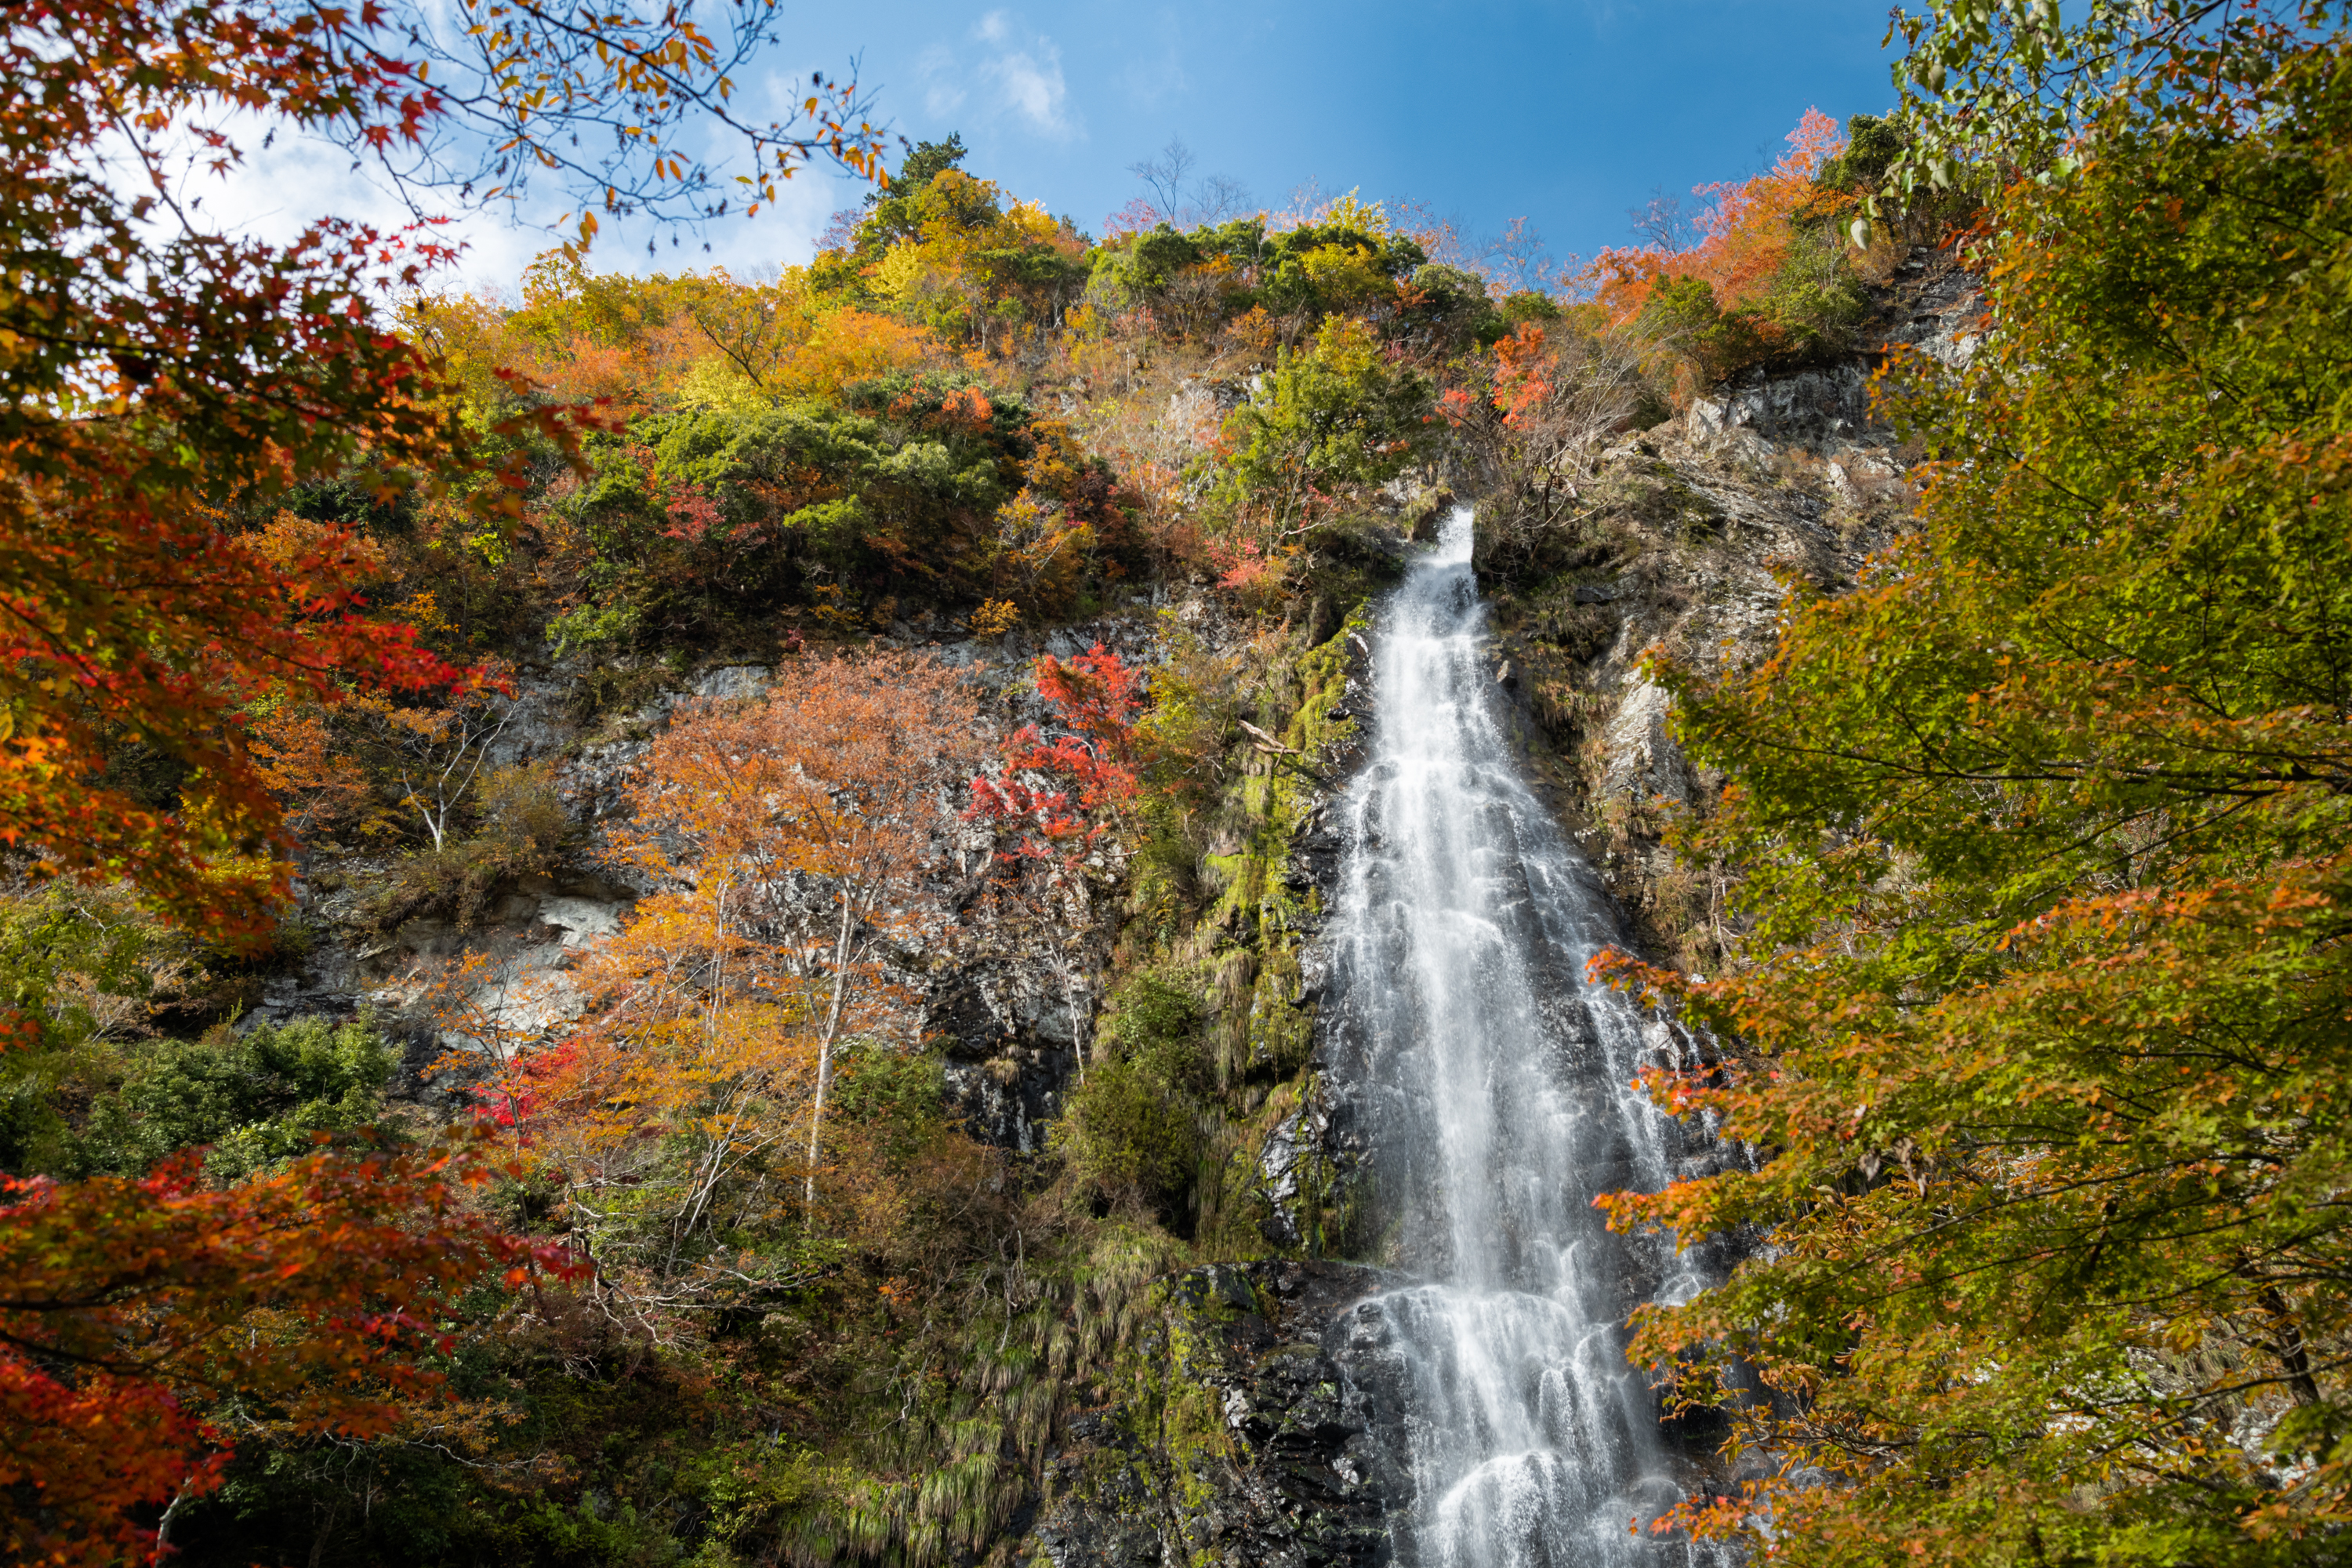 NIKON-CORPORATION_NIKON-D850_2481082290-2481196423_19897 兵庫県  天滝 (兵庫県一の落差を誇る紅葉景色の美しい絶景の滝 !撮影した写真の紹介、 アクセス情報や撮影ポイントなど!)　